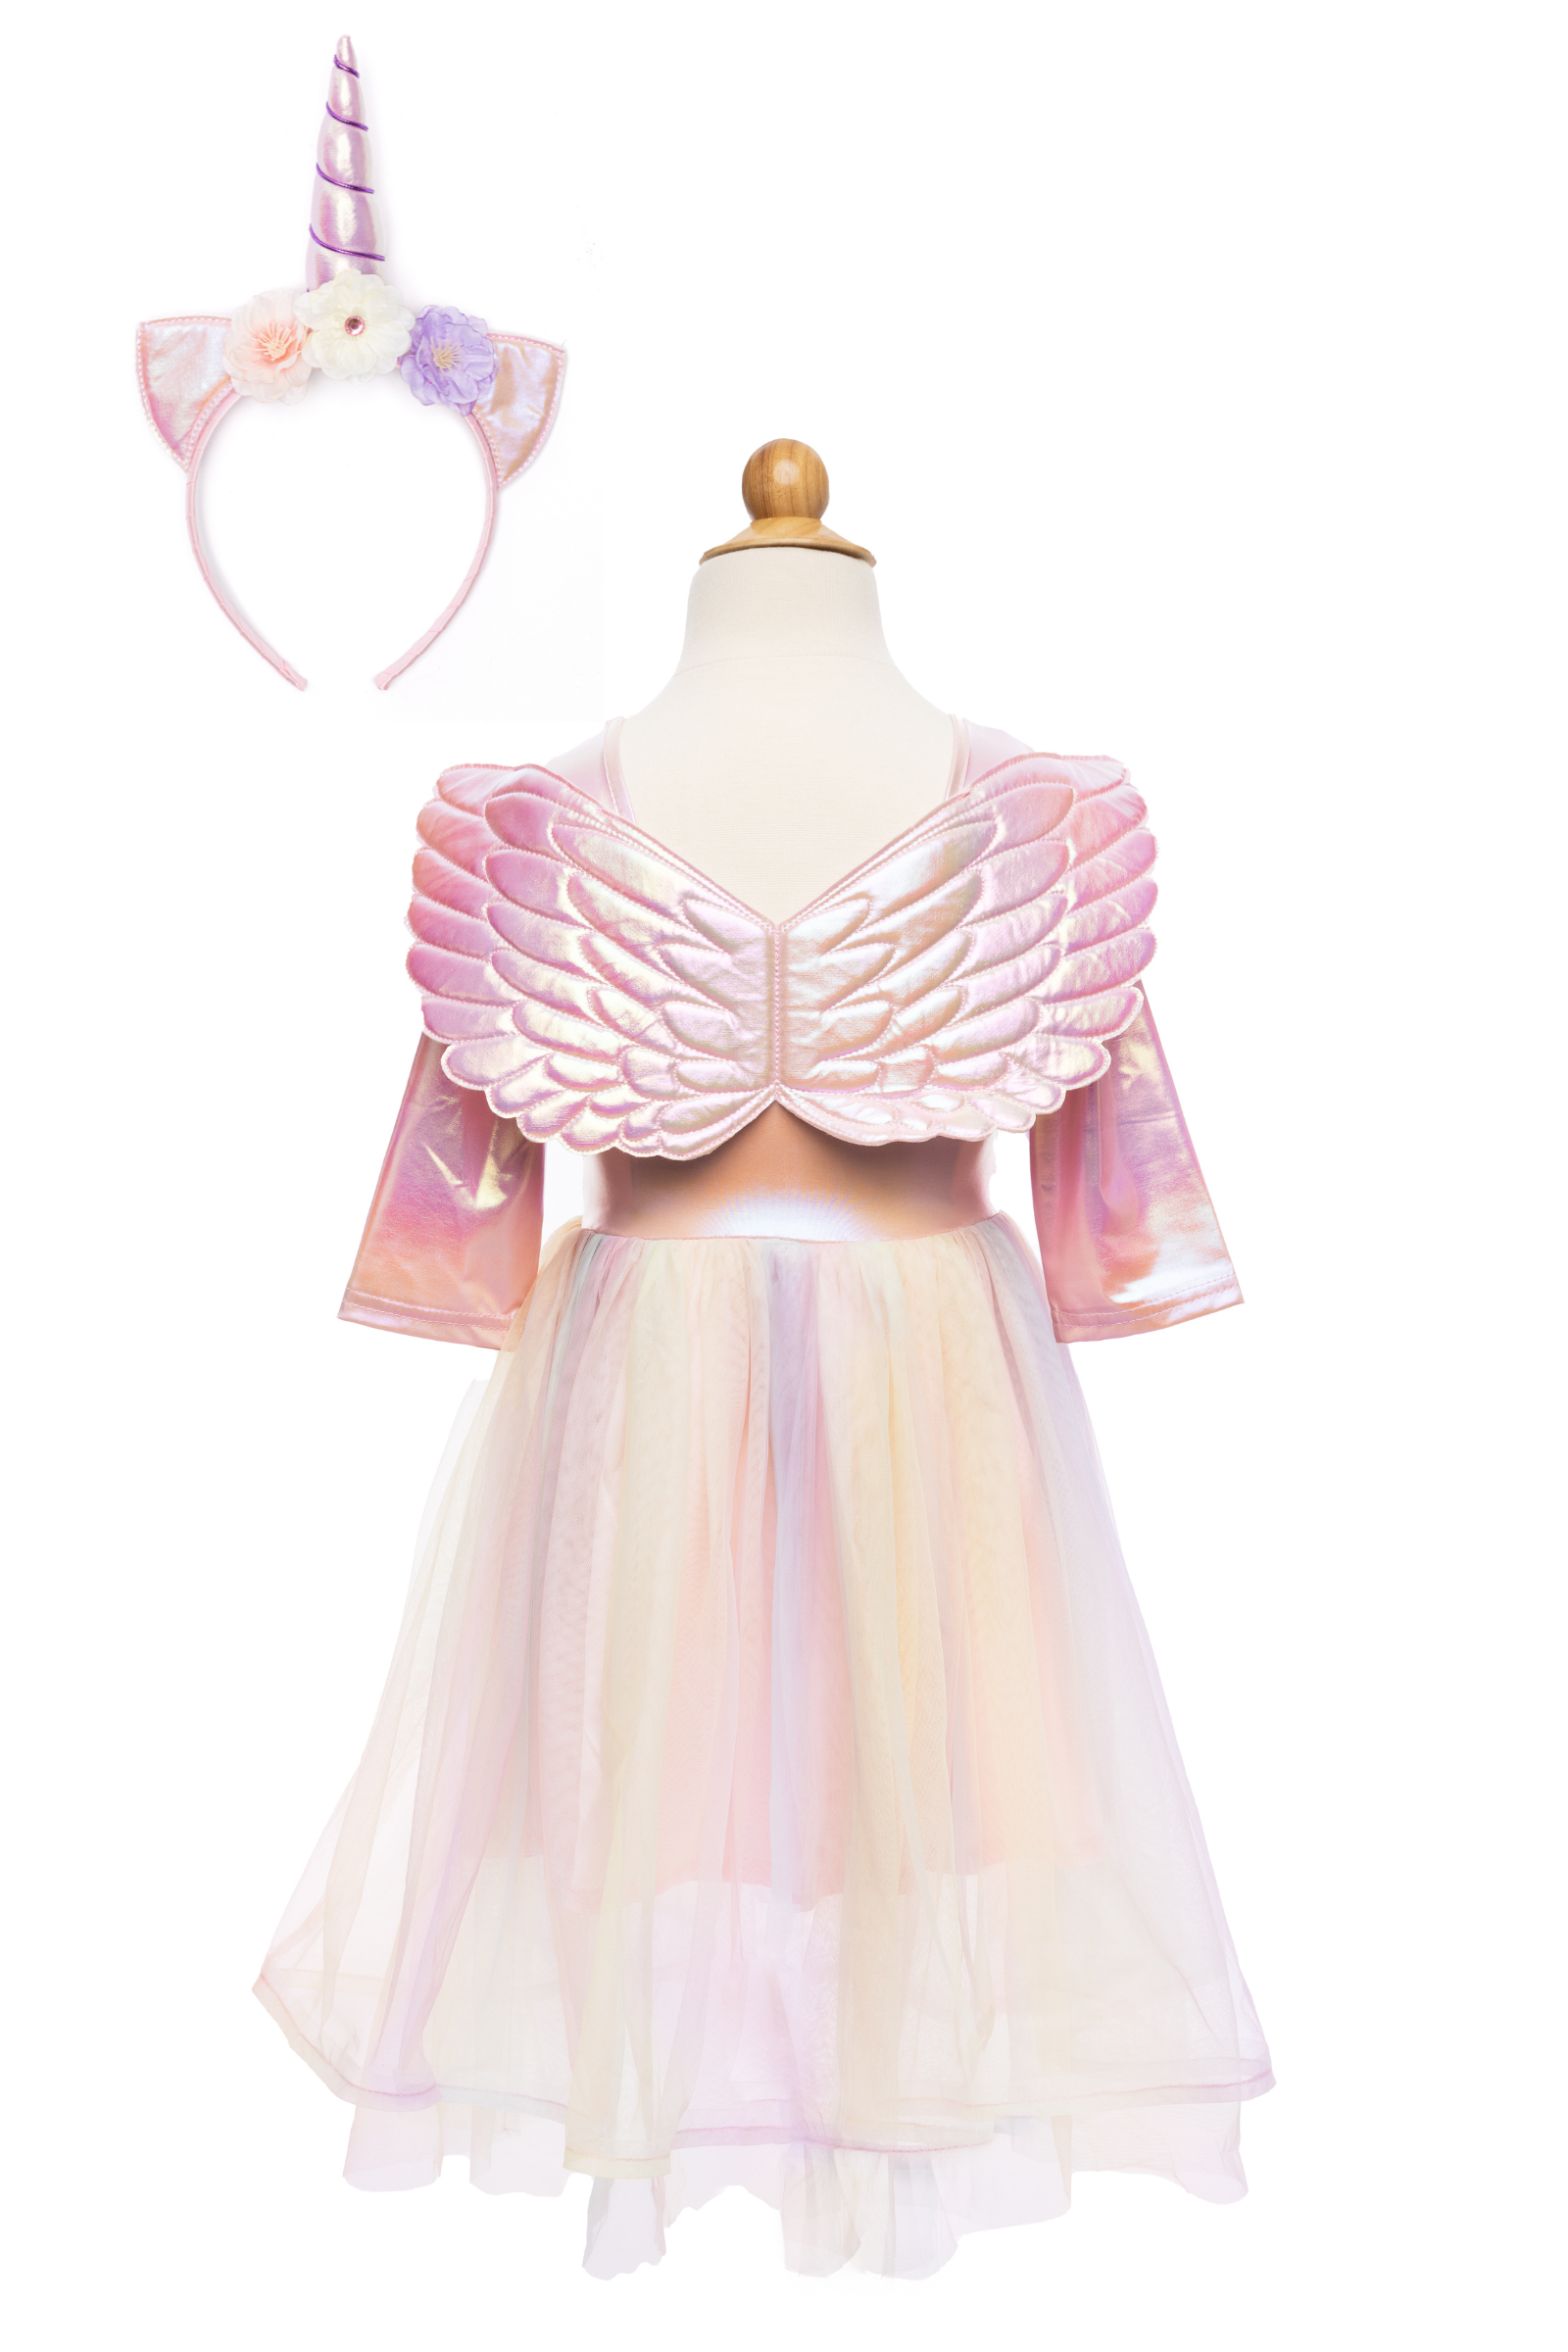 Alicorn Dress with Wings & Headband - 2